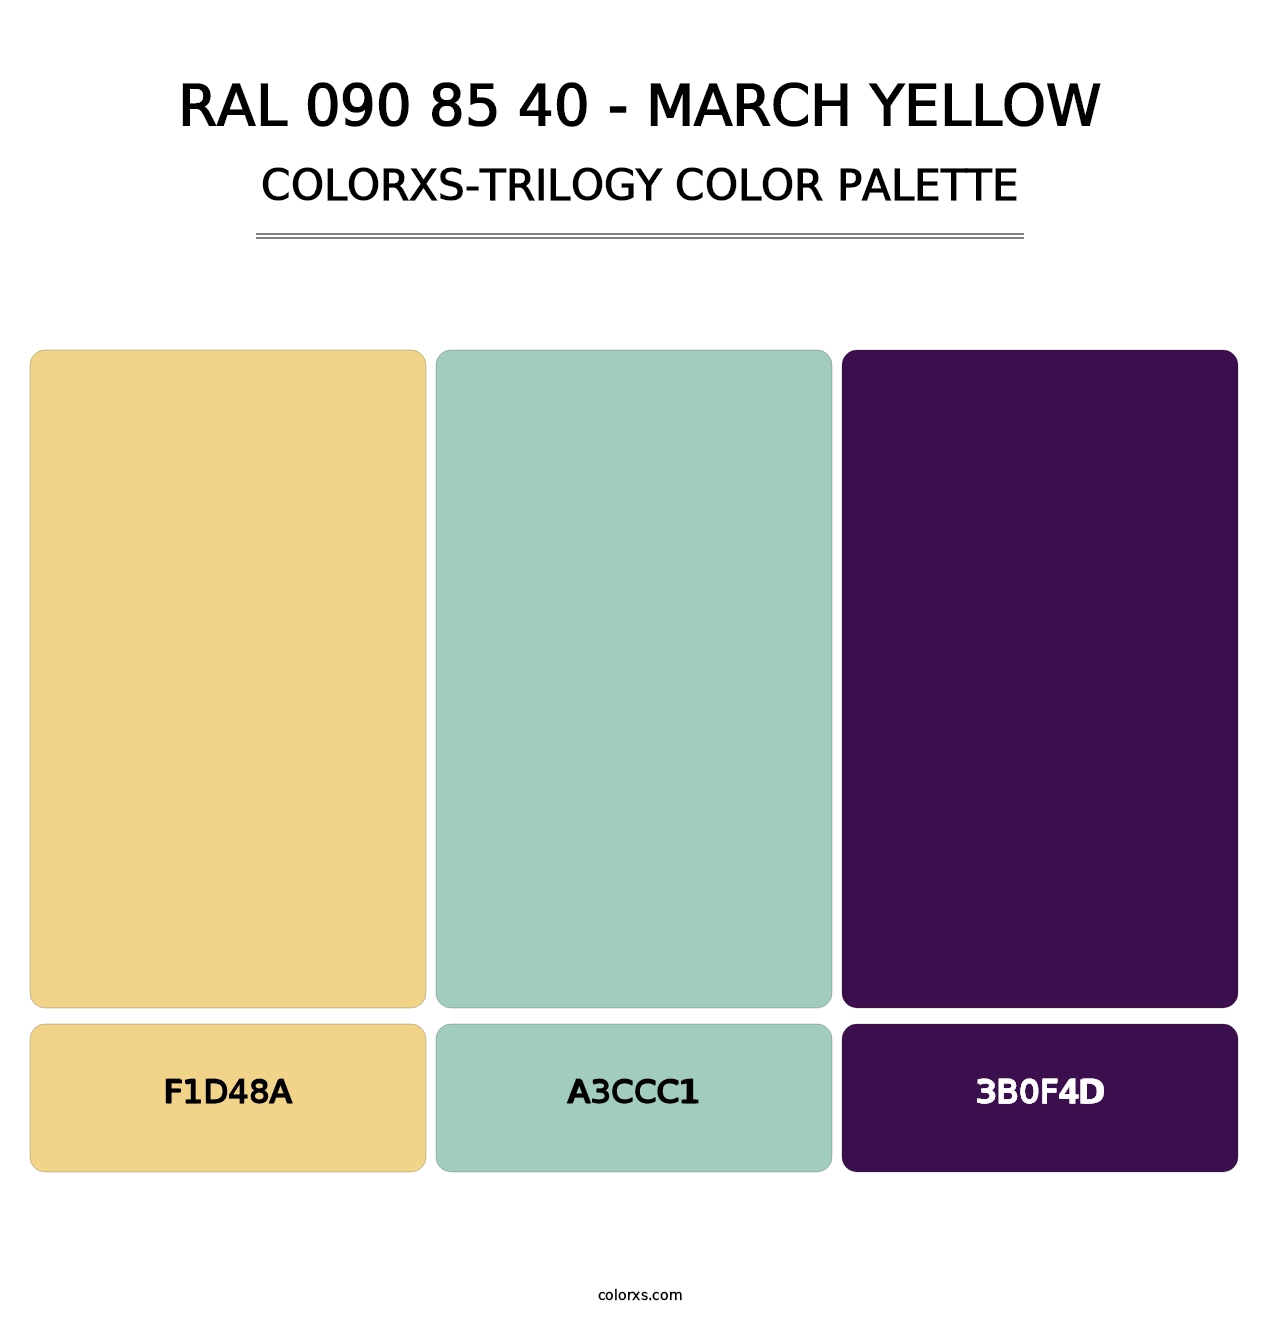 RAL 090 85 40 - March Yellow - Colorxs Trilogy Palette